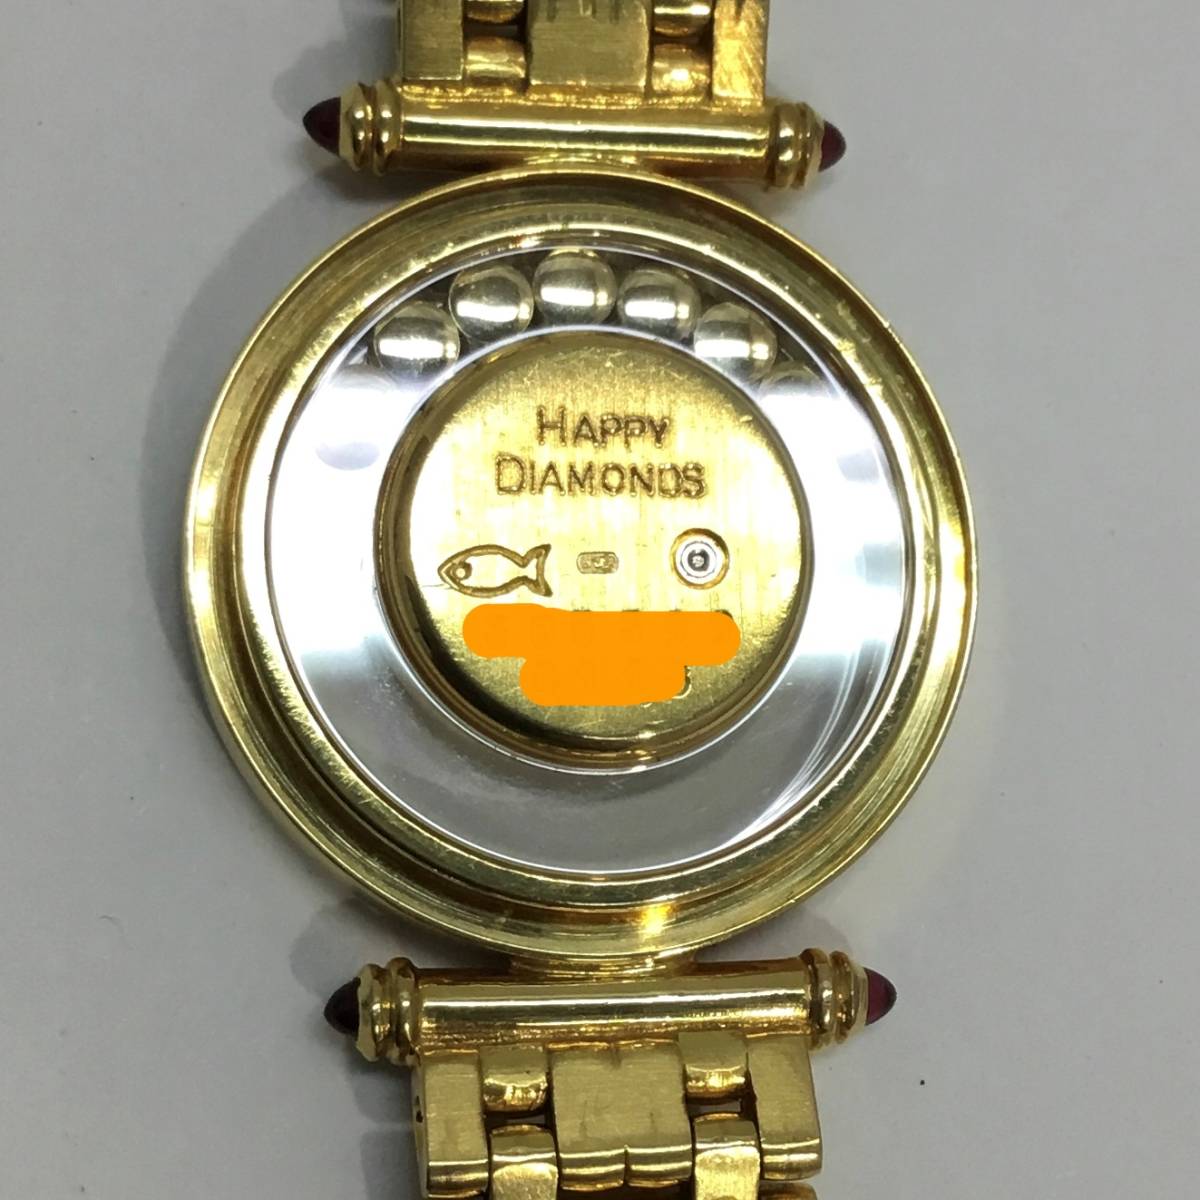  б/у бесплатная доставка б/у A Chopard часы CHOPARD happy бриллиант 20/4993 бриллиантовая оправа 7P moving dial Be K18 750YG 145119